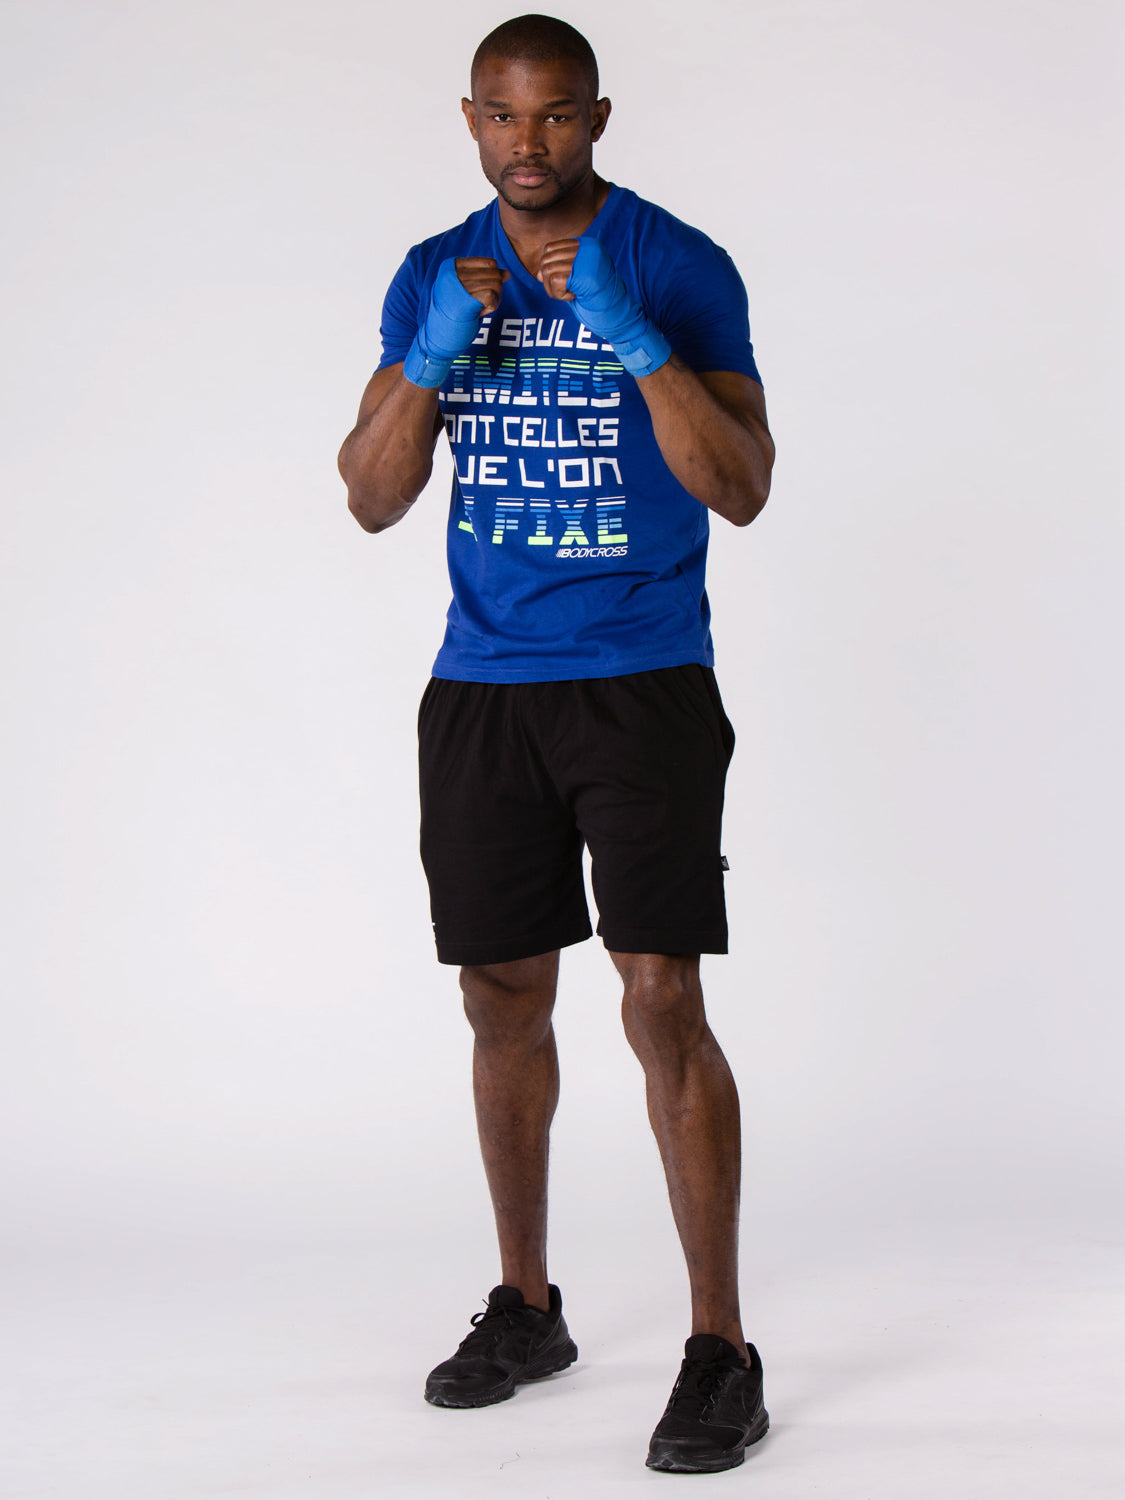 Men's Casual T-shirt BodyCross - Otis Blue + Badis Black - Front View